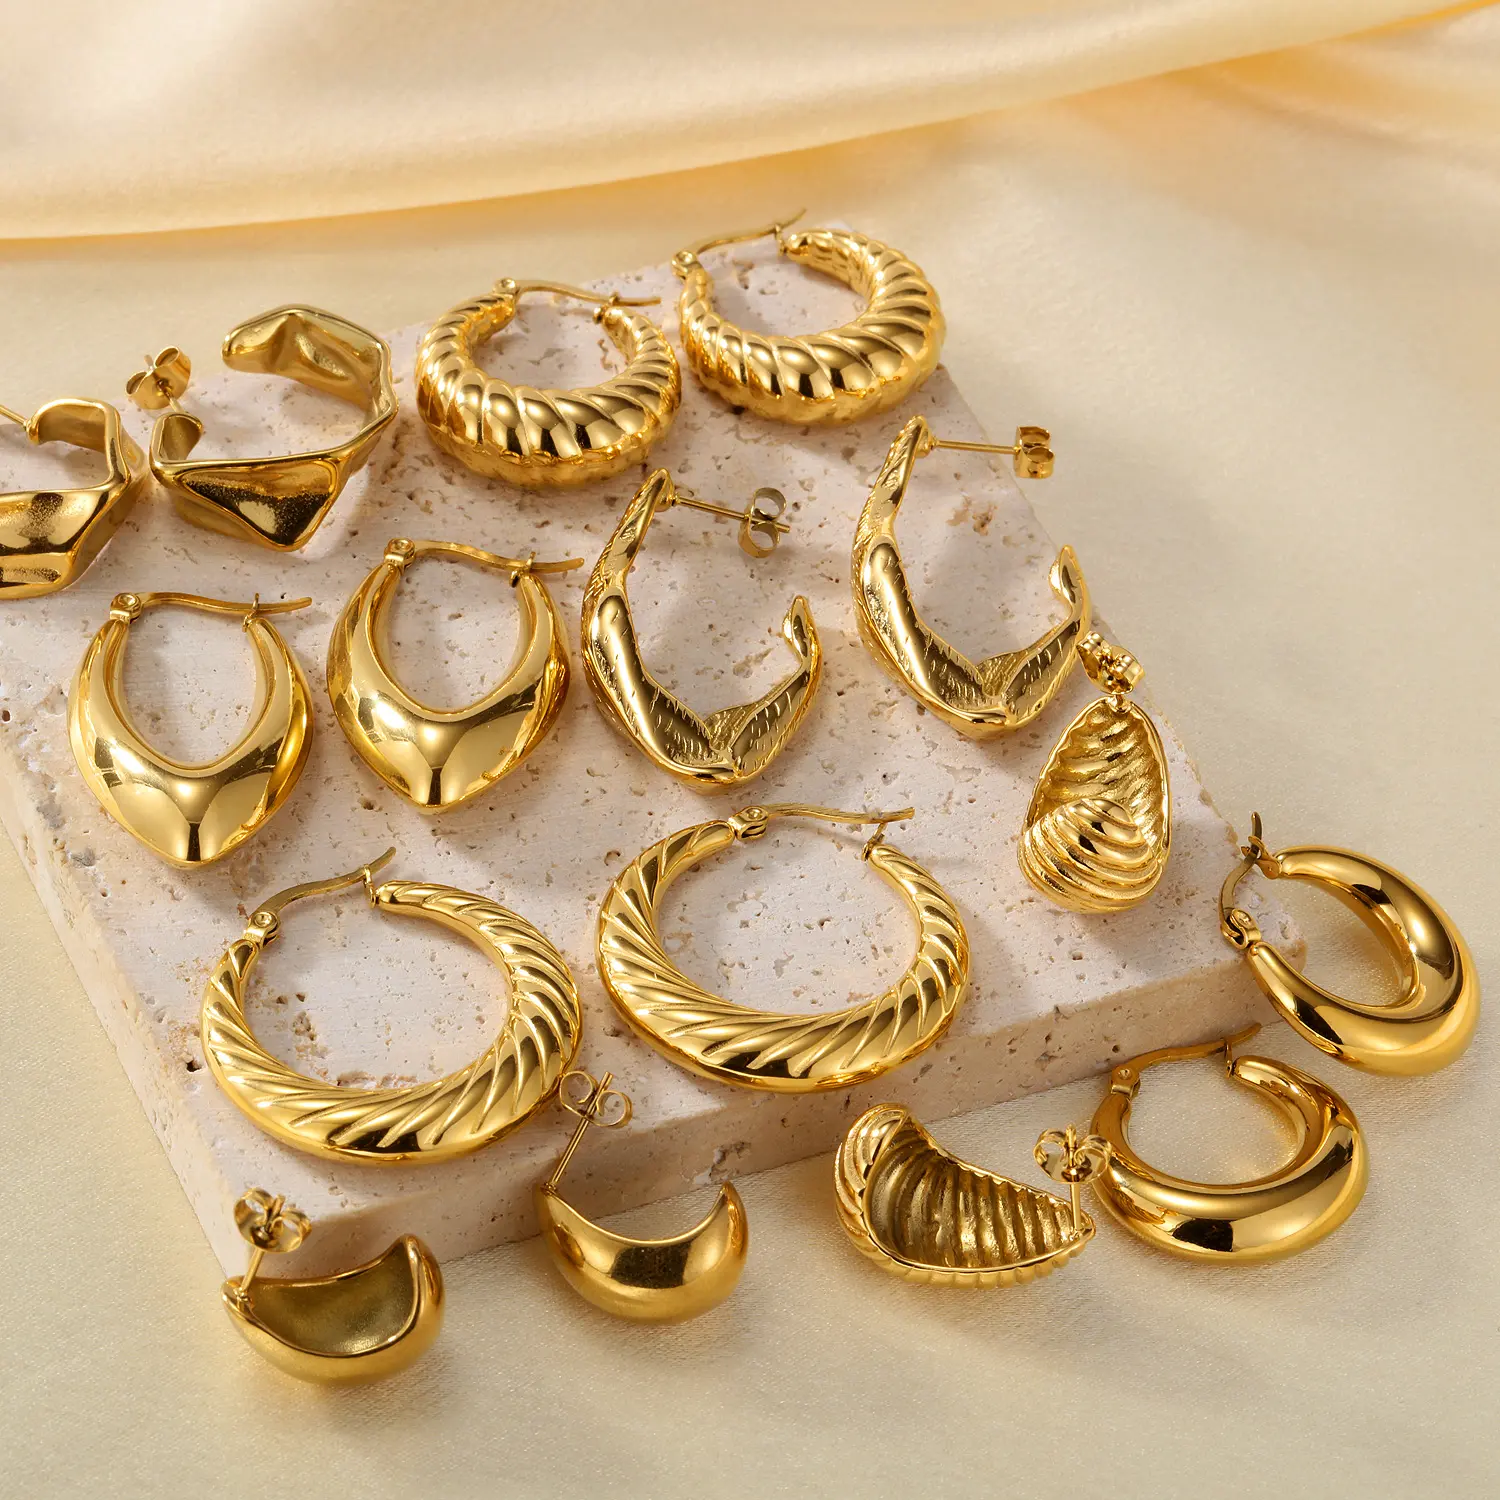 Fashion Chunky Beaded Hoop Earrings Elegant Hoop Earrings 18k Gold Plated Stainless Steel Fine Jewelry Earrings